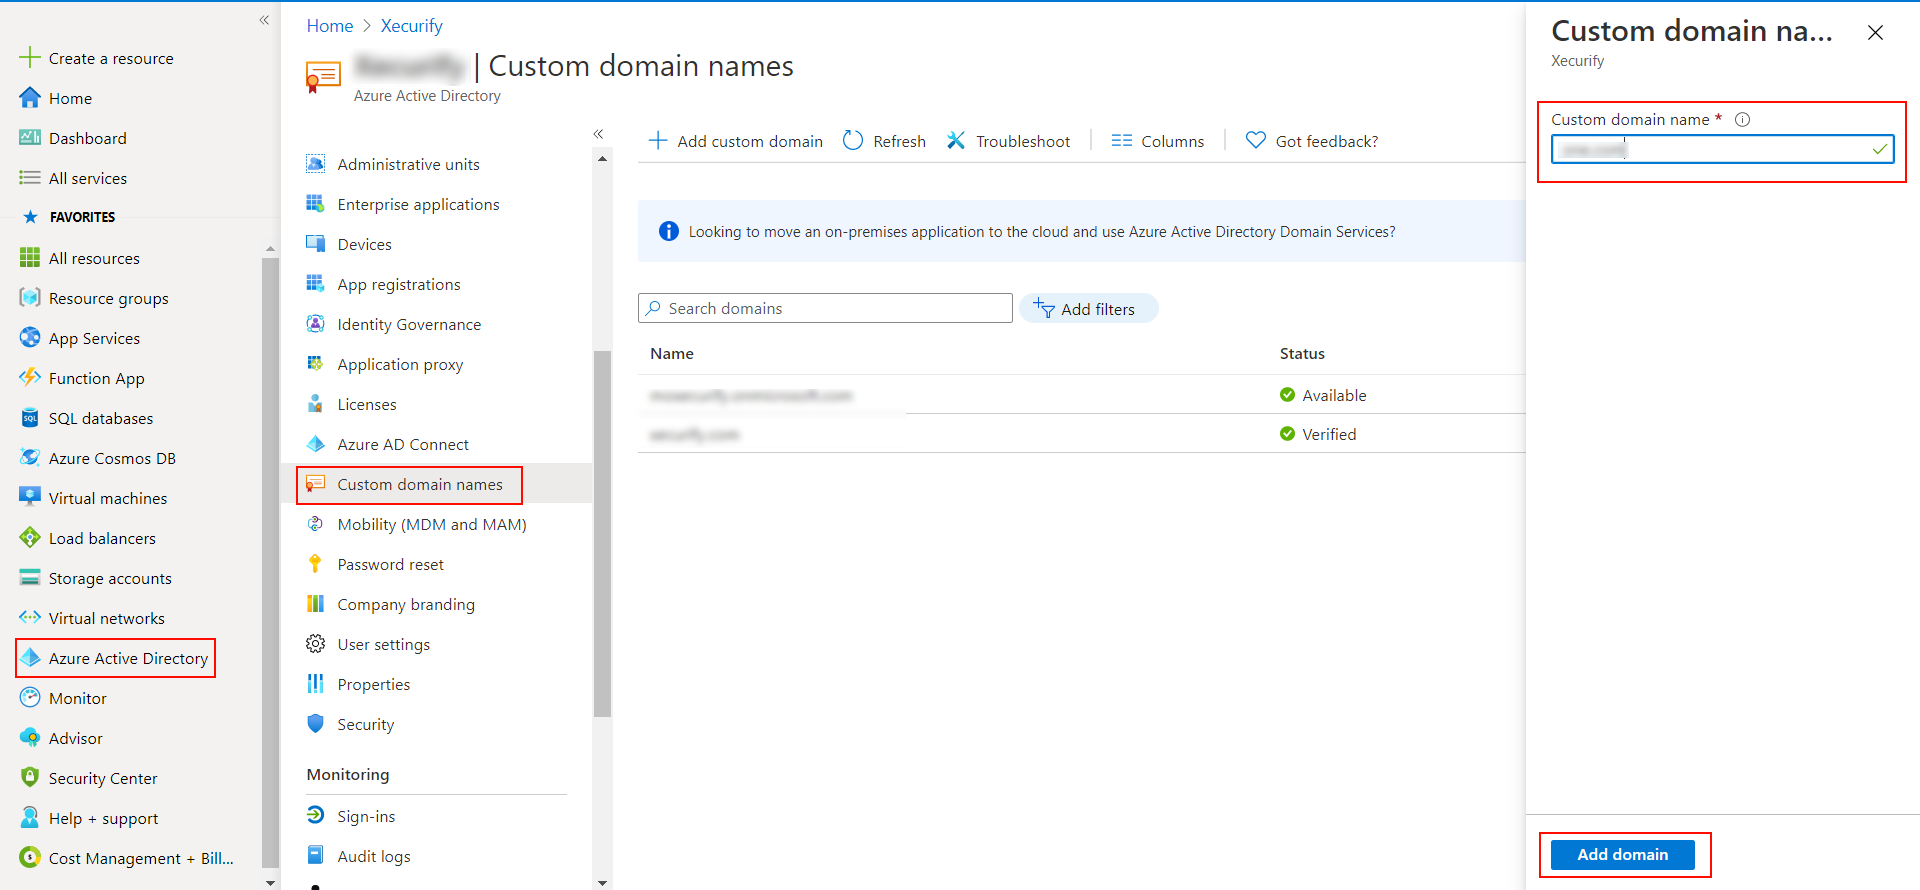 Microsoft Teams SSO Single Sign-On (SSO) Add custom domain